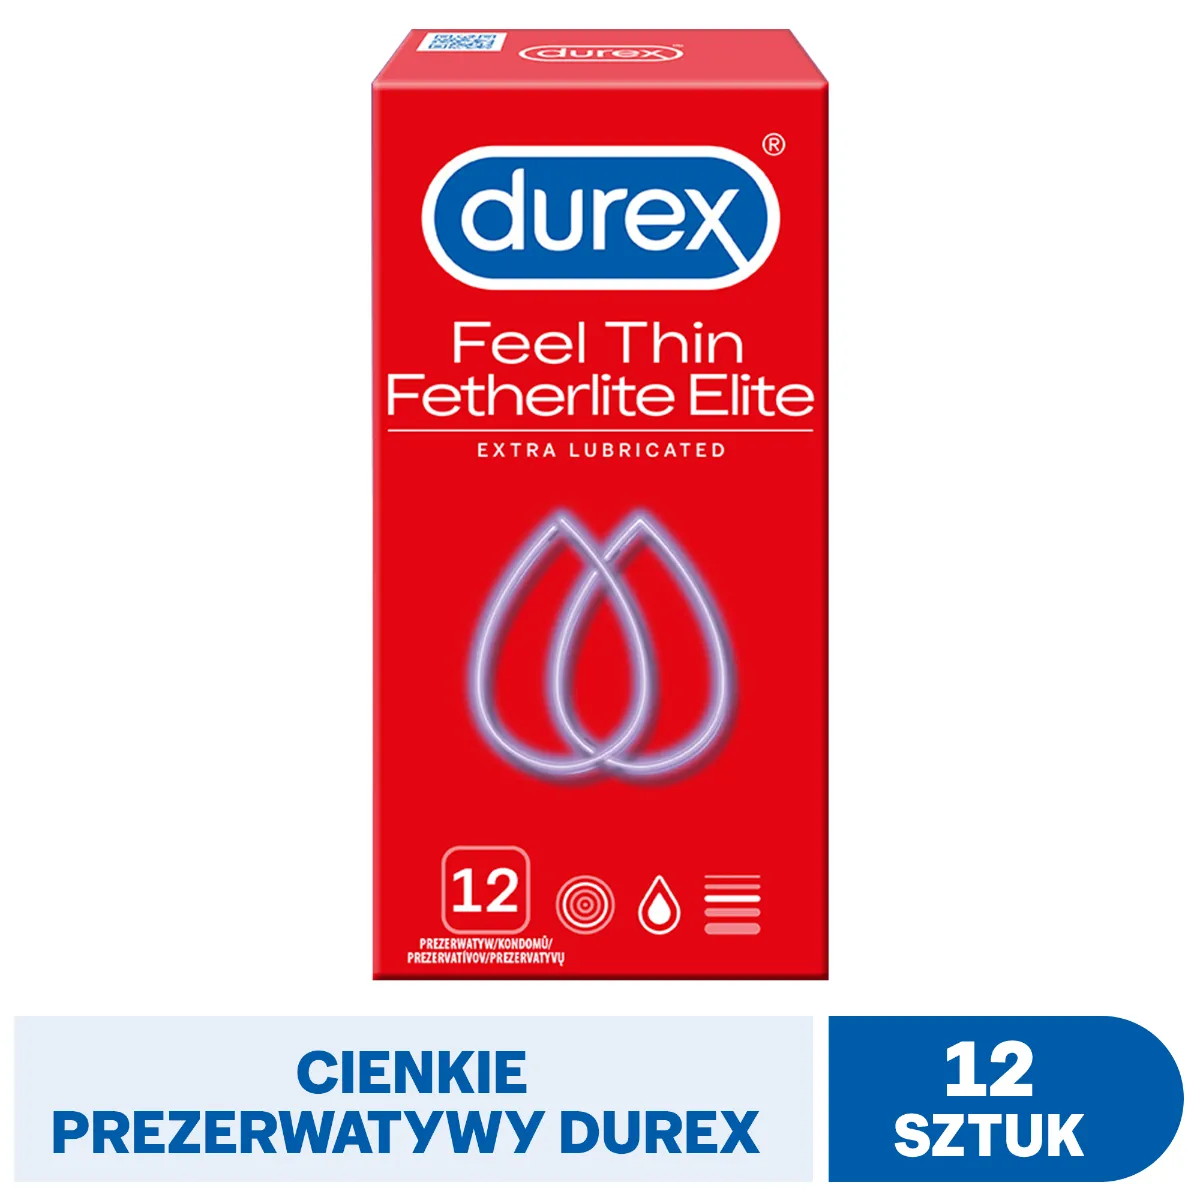 Prezerwatywy Durex Featherlite Elite, 12 szt. 